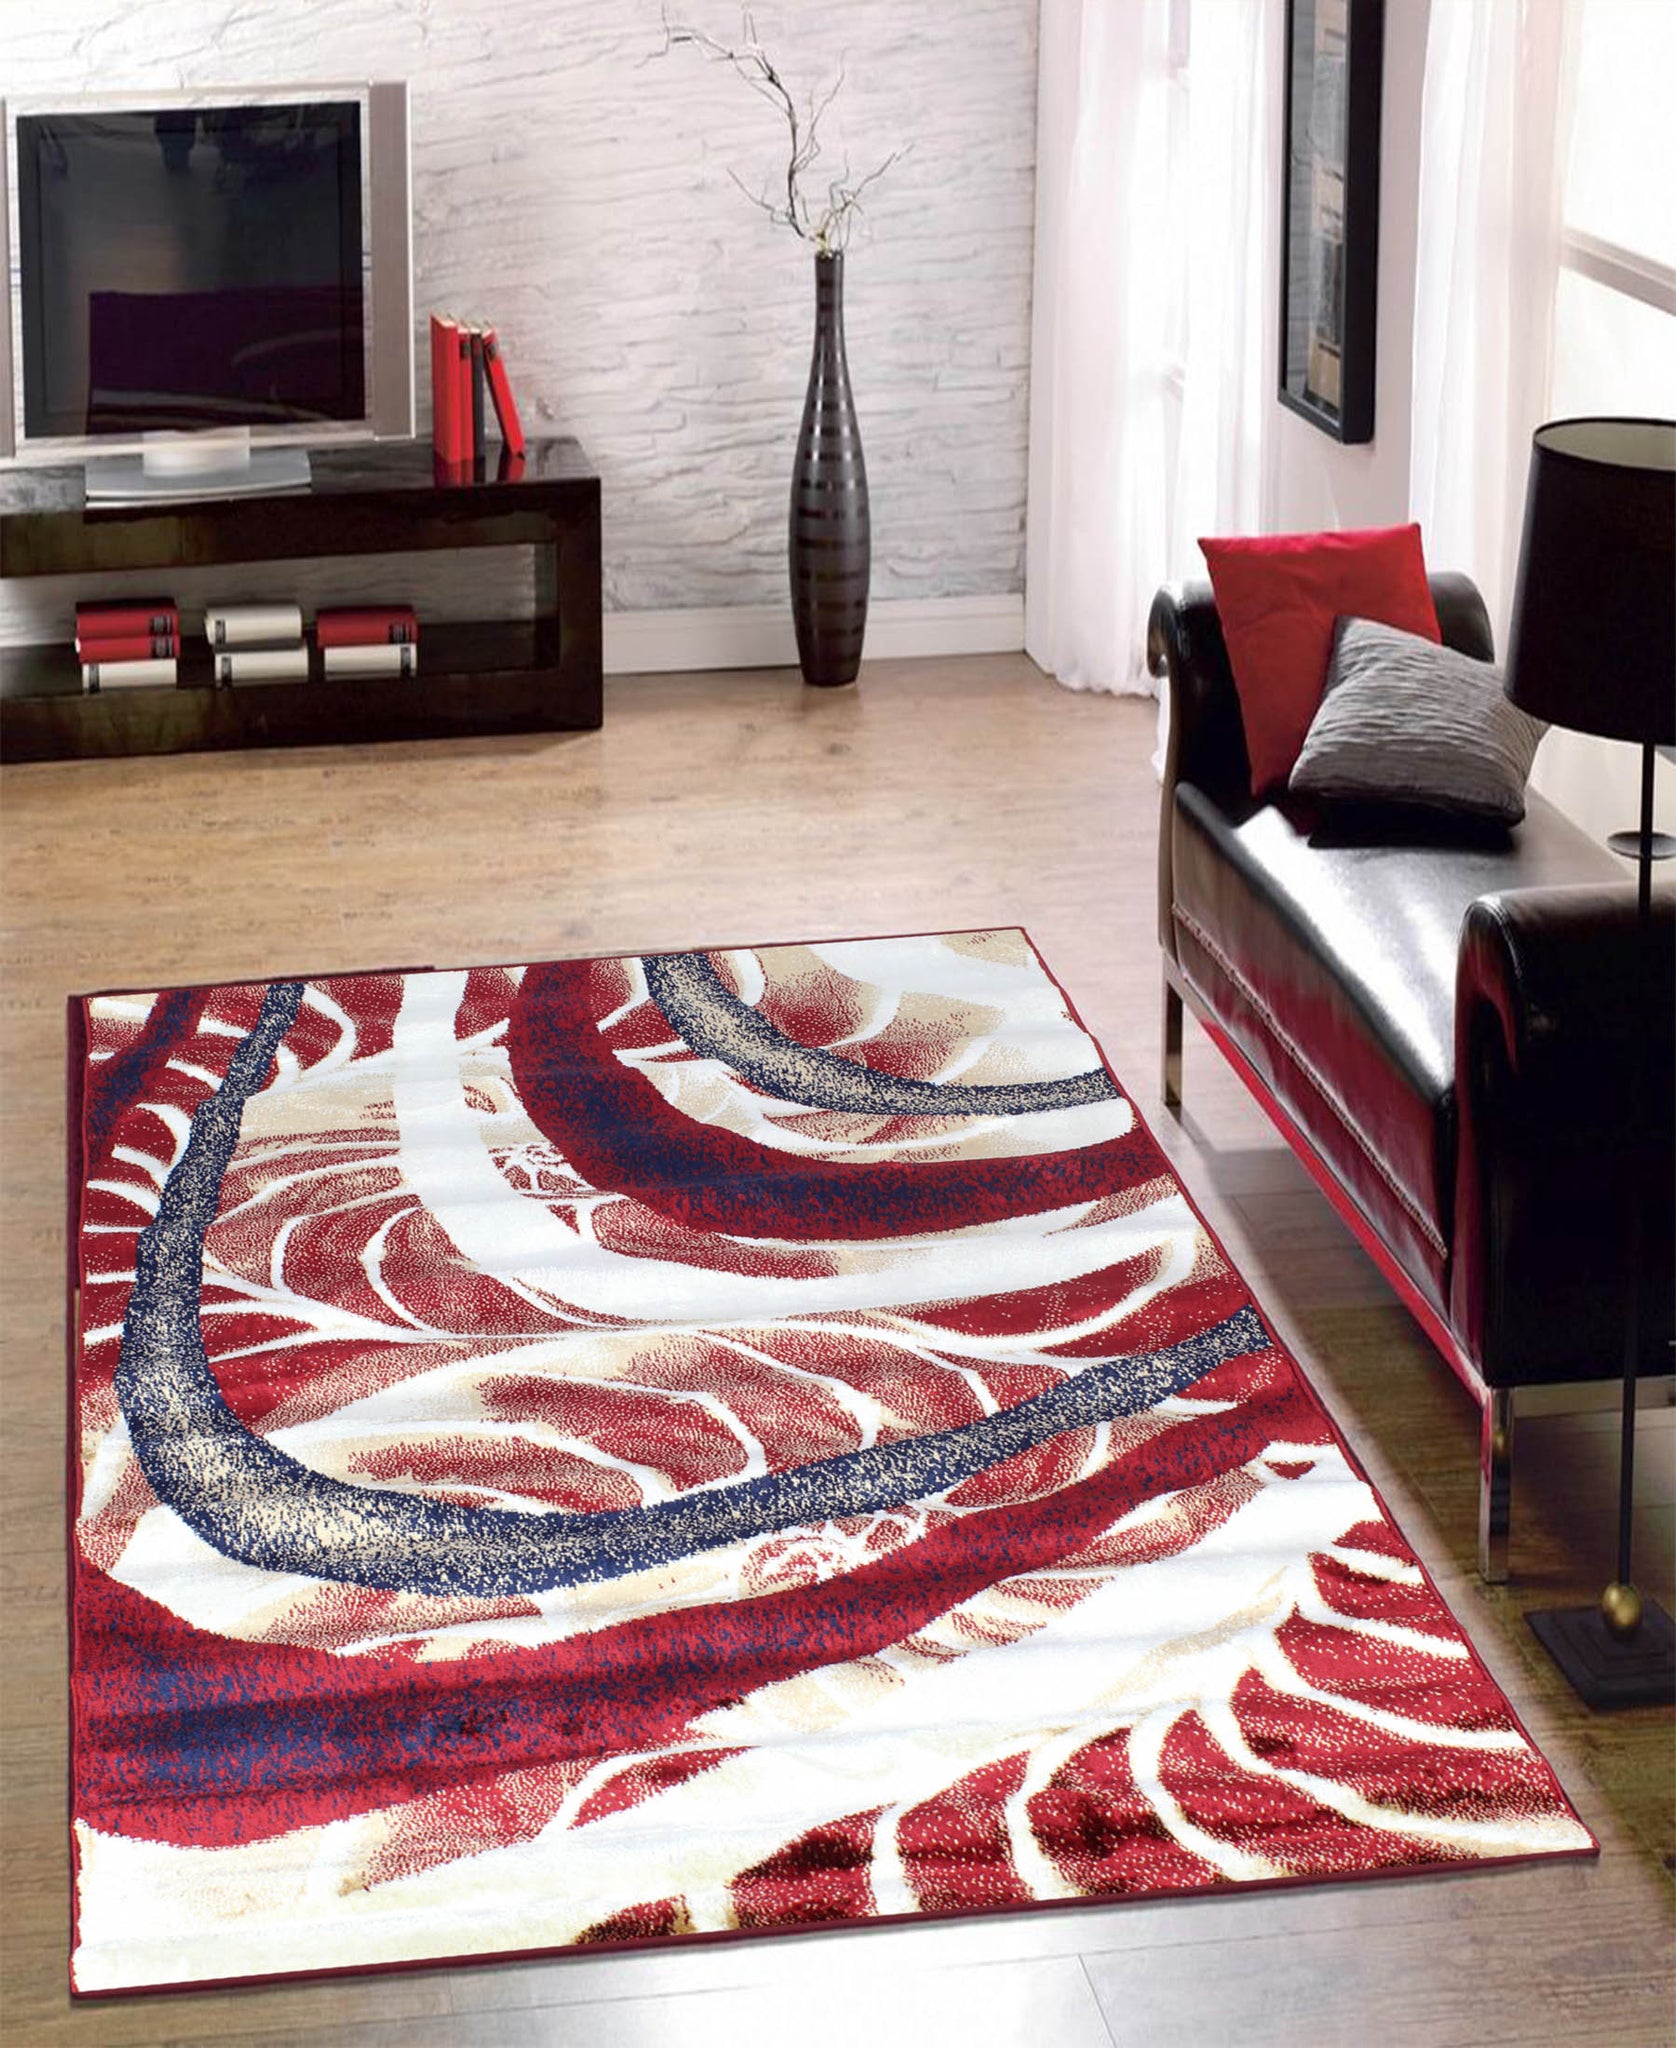 Cape Town Moondust Carpet 2000mm x 2700mm - Red